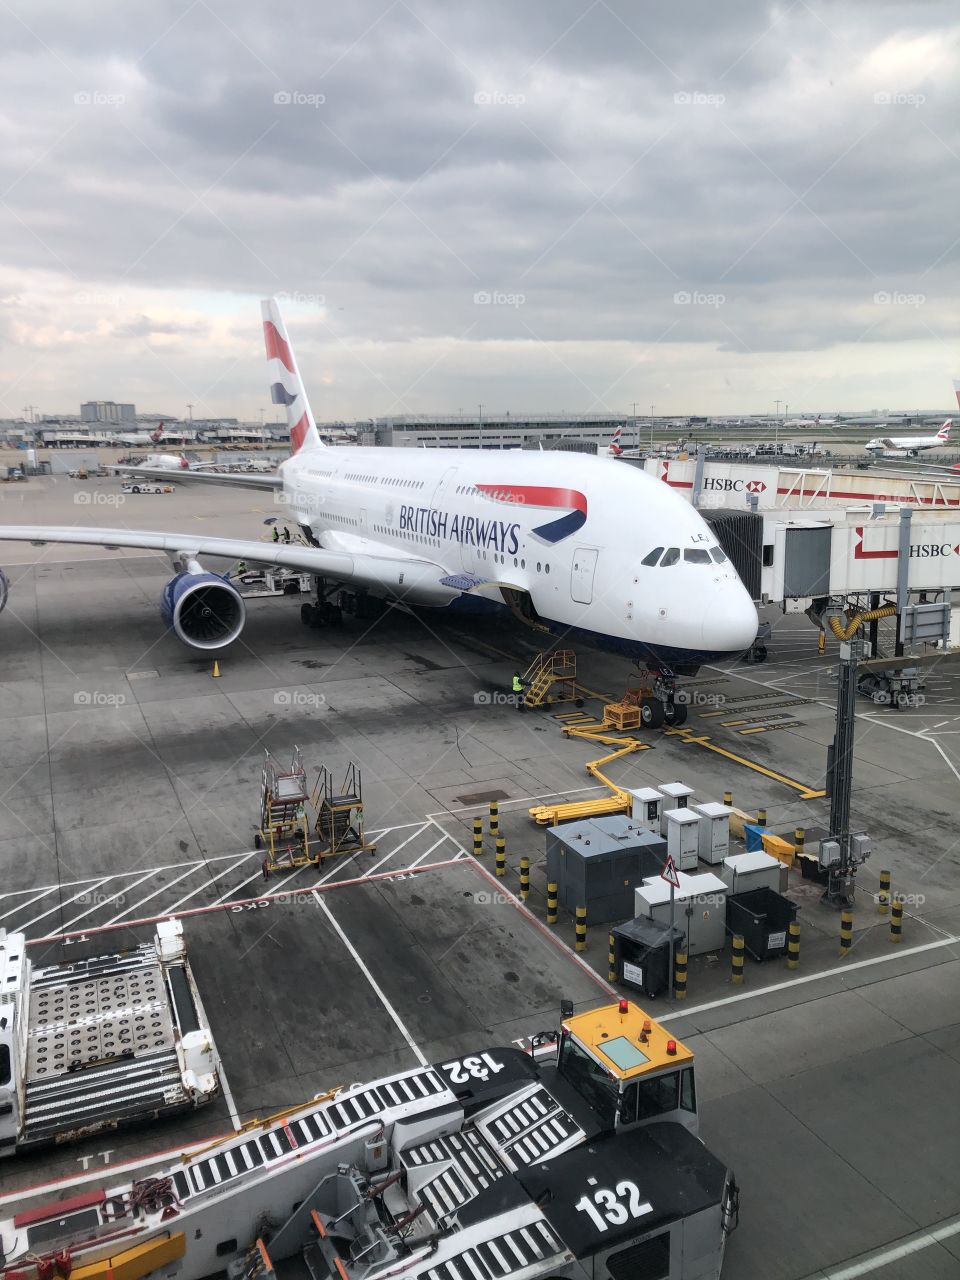 British Airways airplane at London Heathrow Airport 